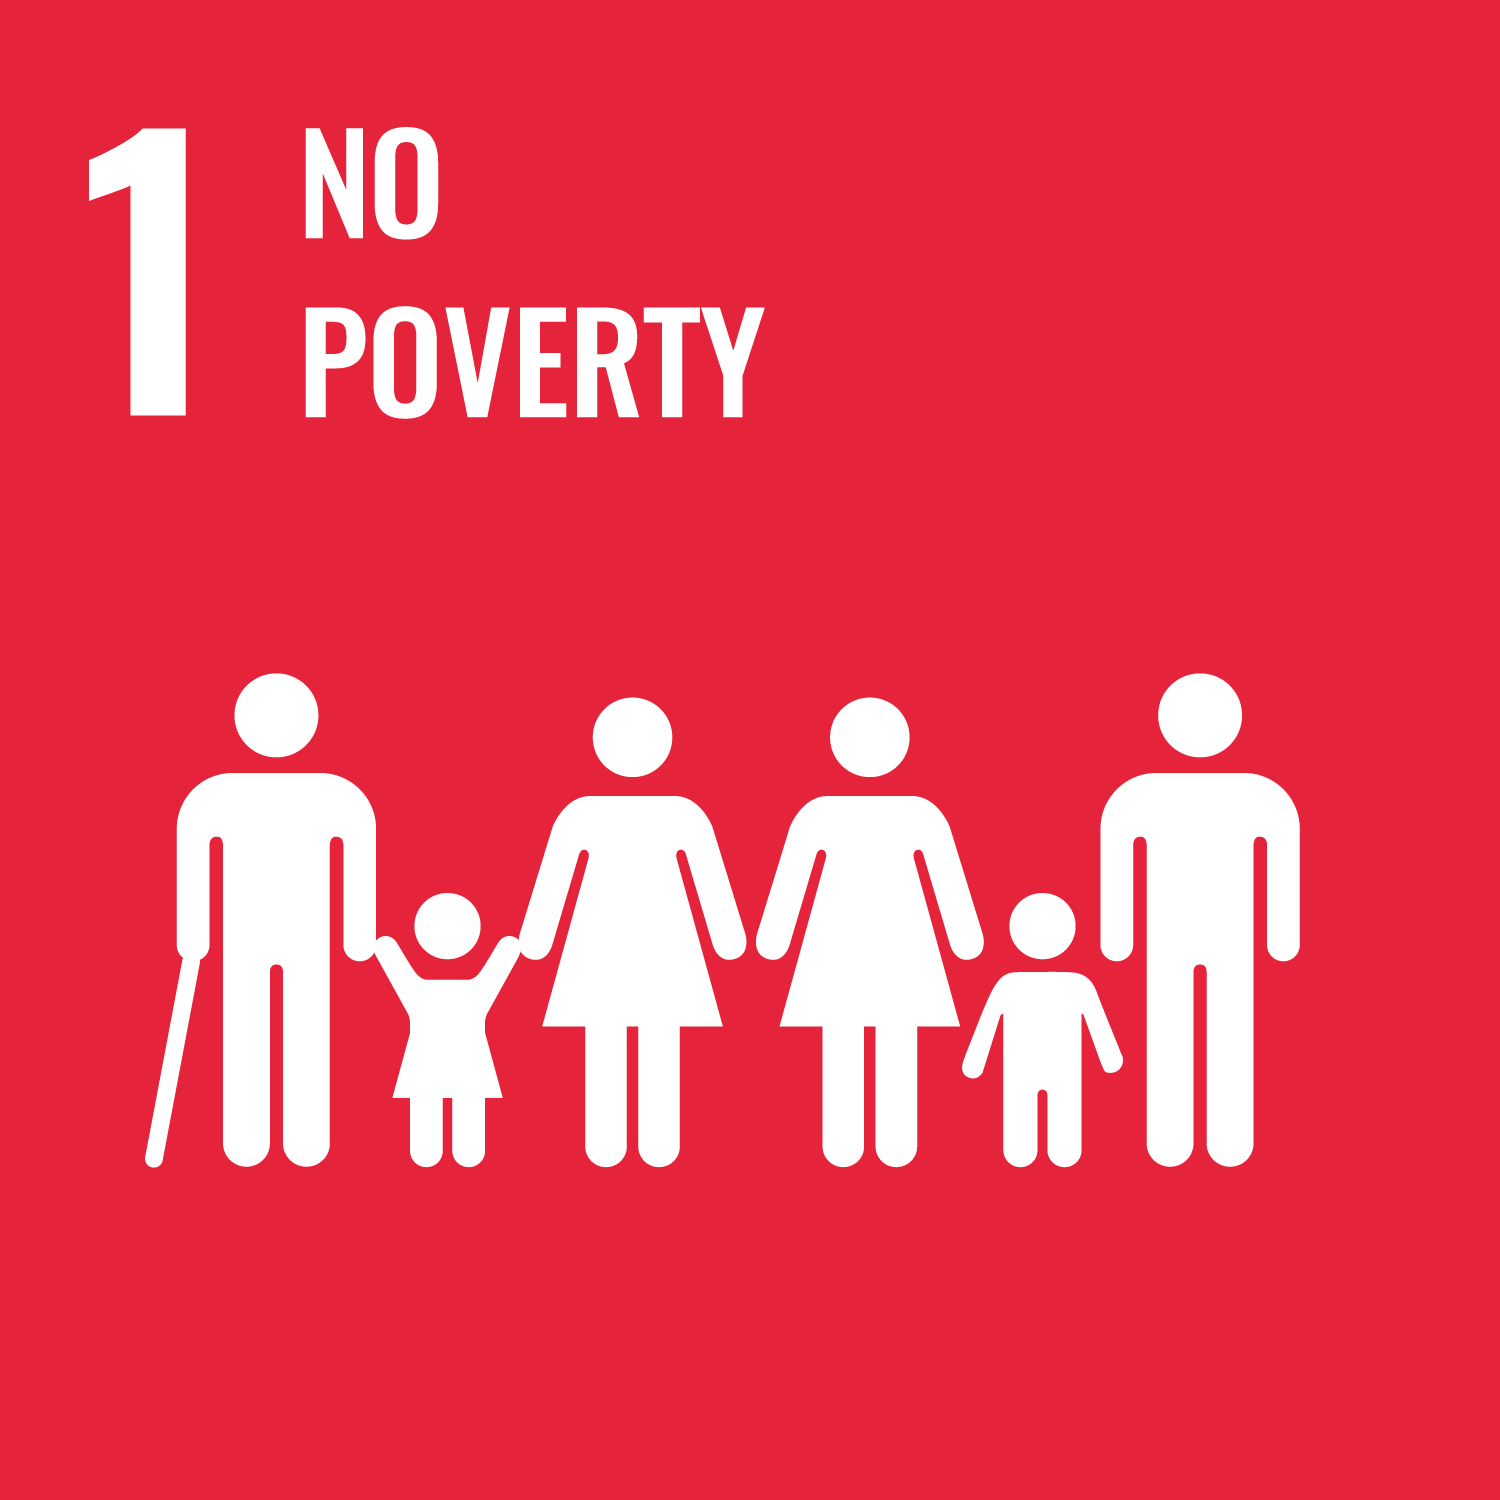 UN SDG 1 No Poverty